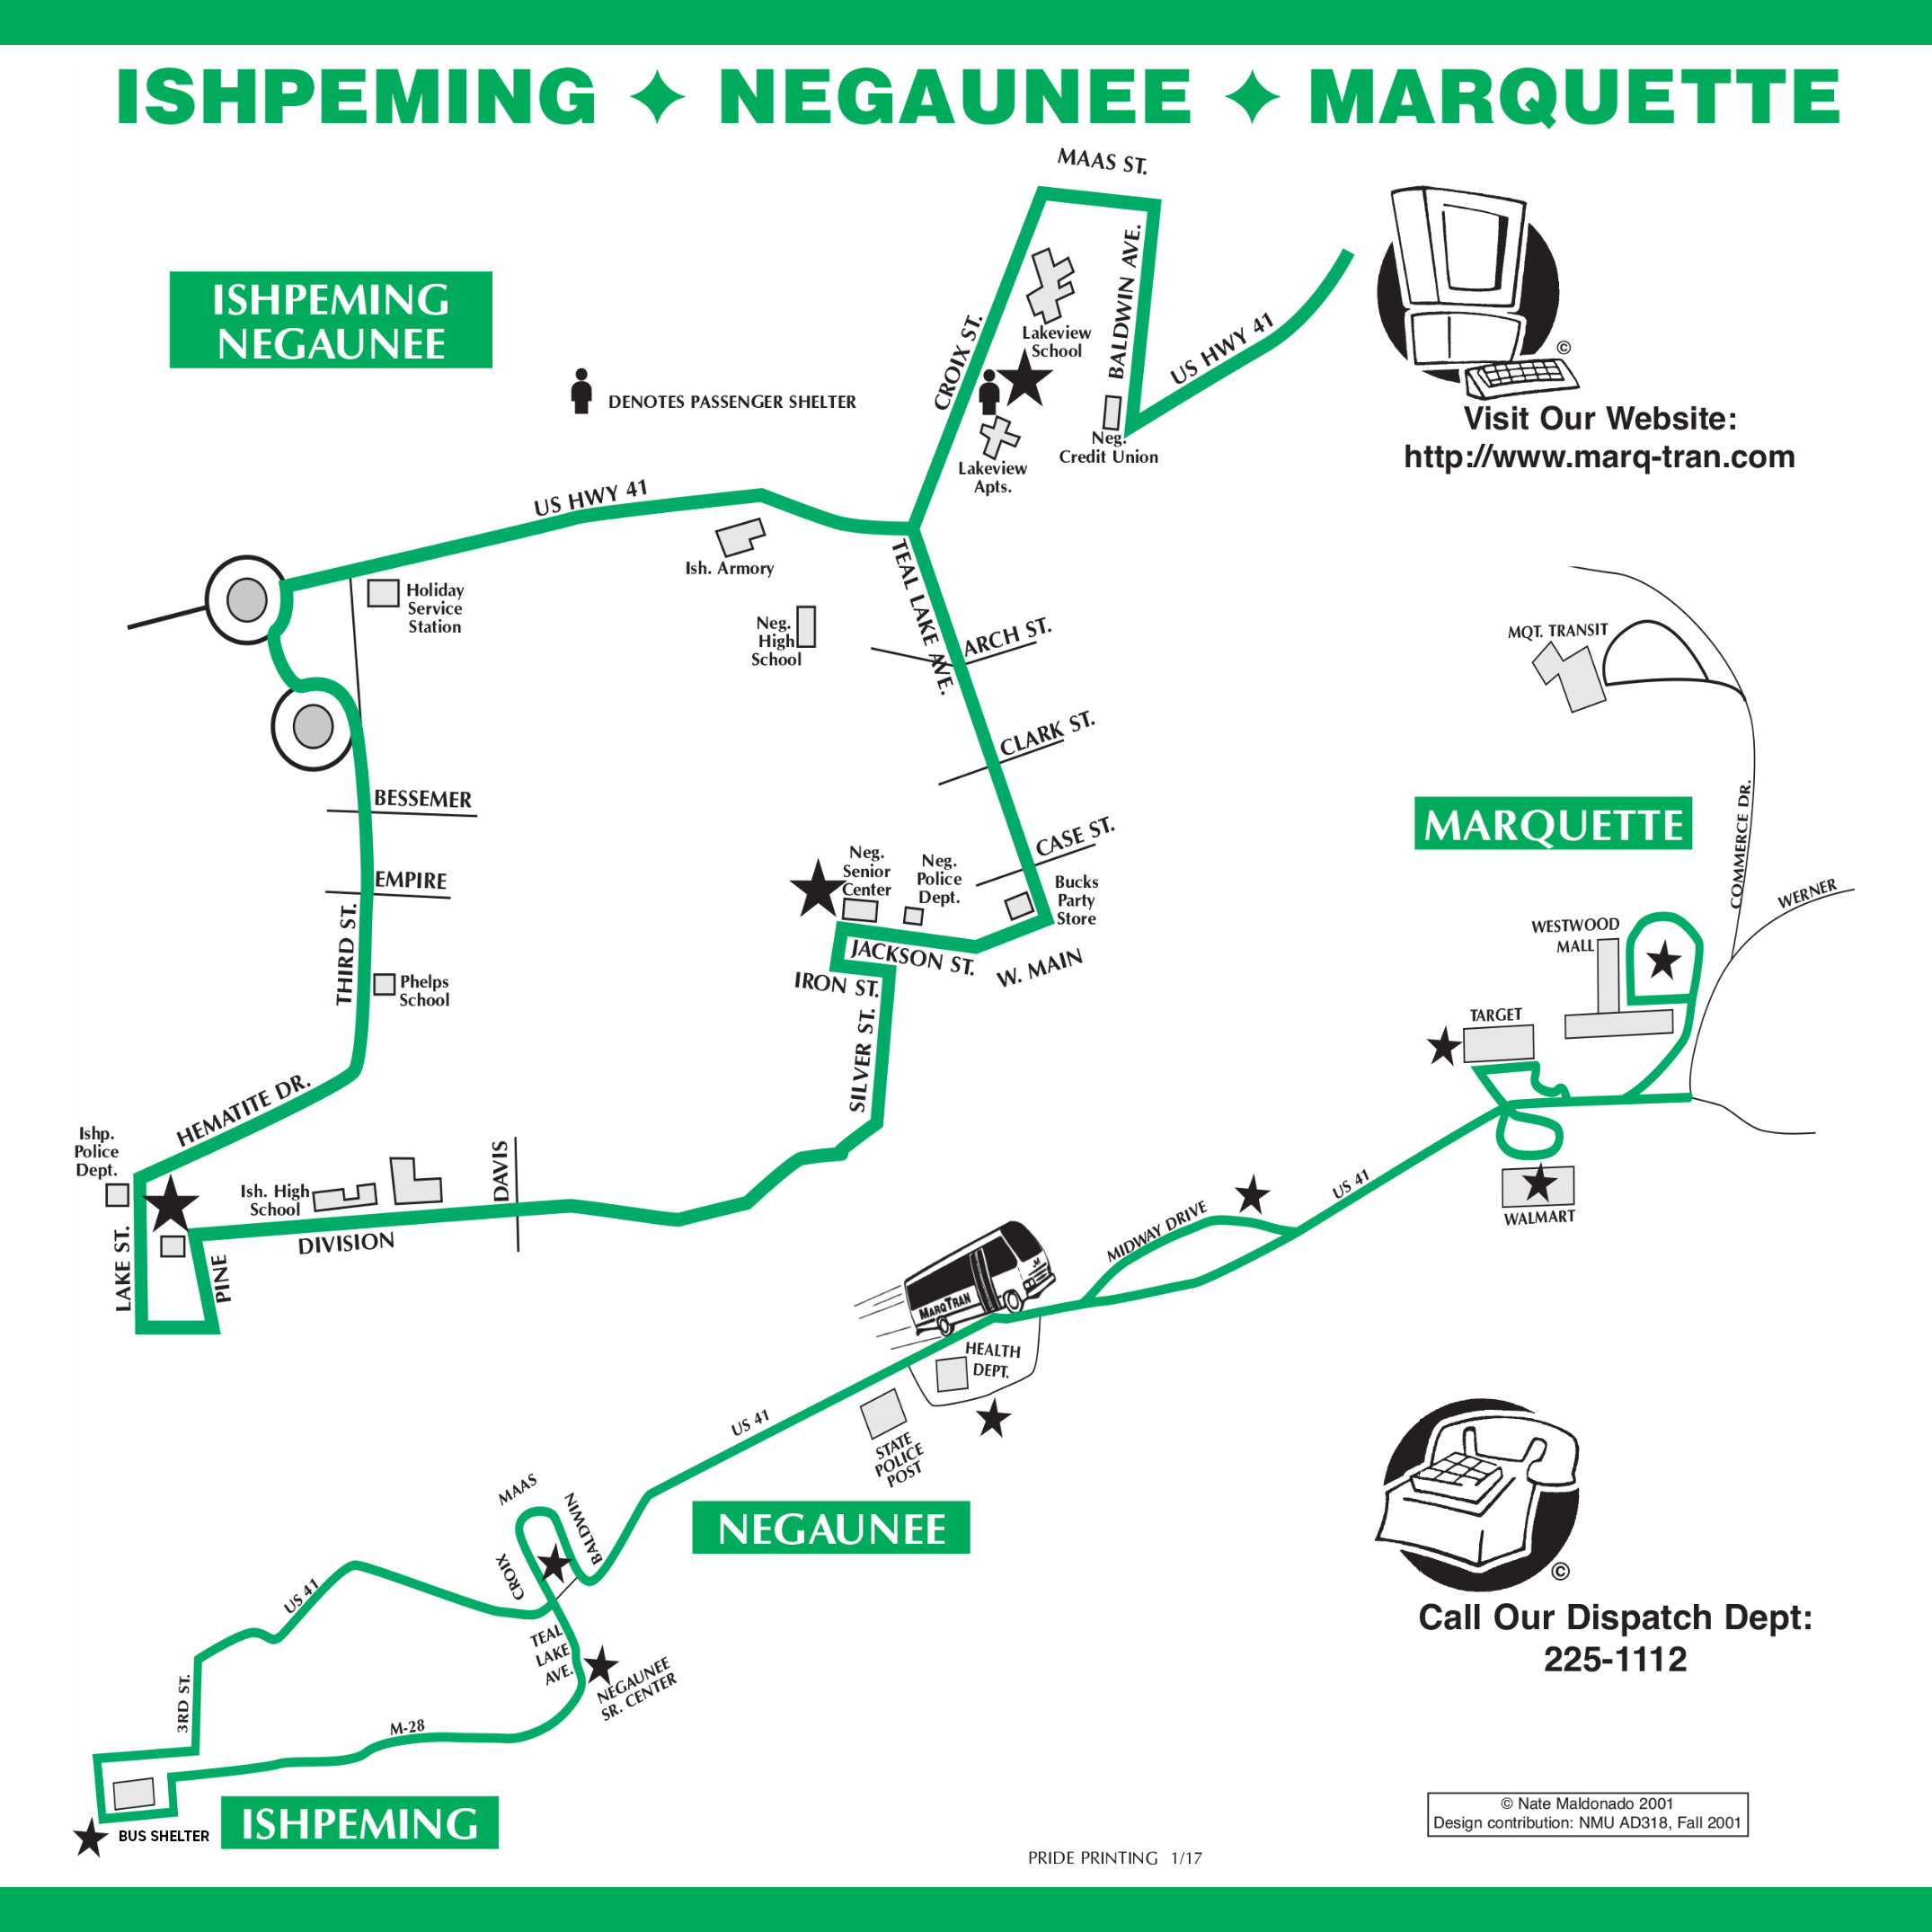 Ishpeming Negaunee Marquette Marq-Tran Route